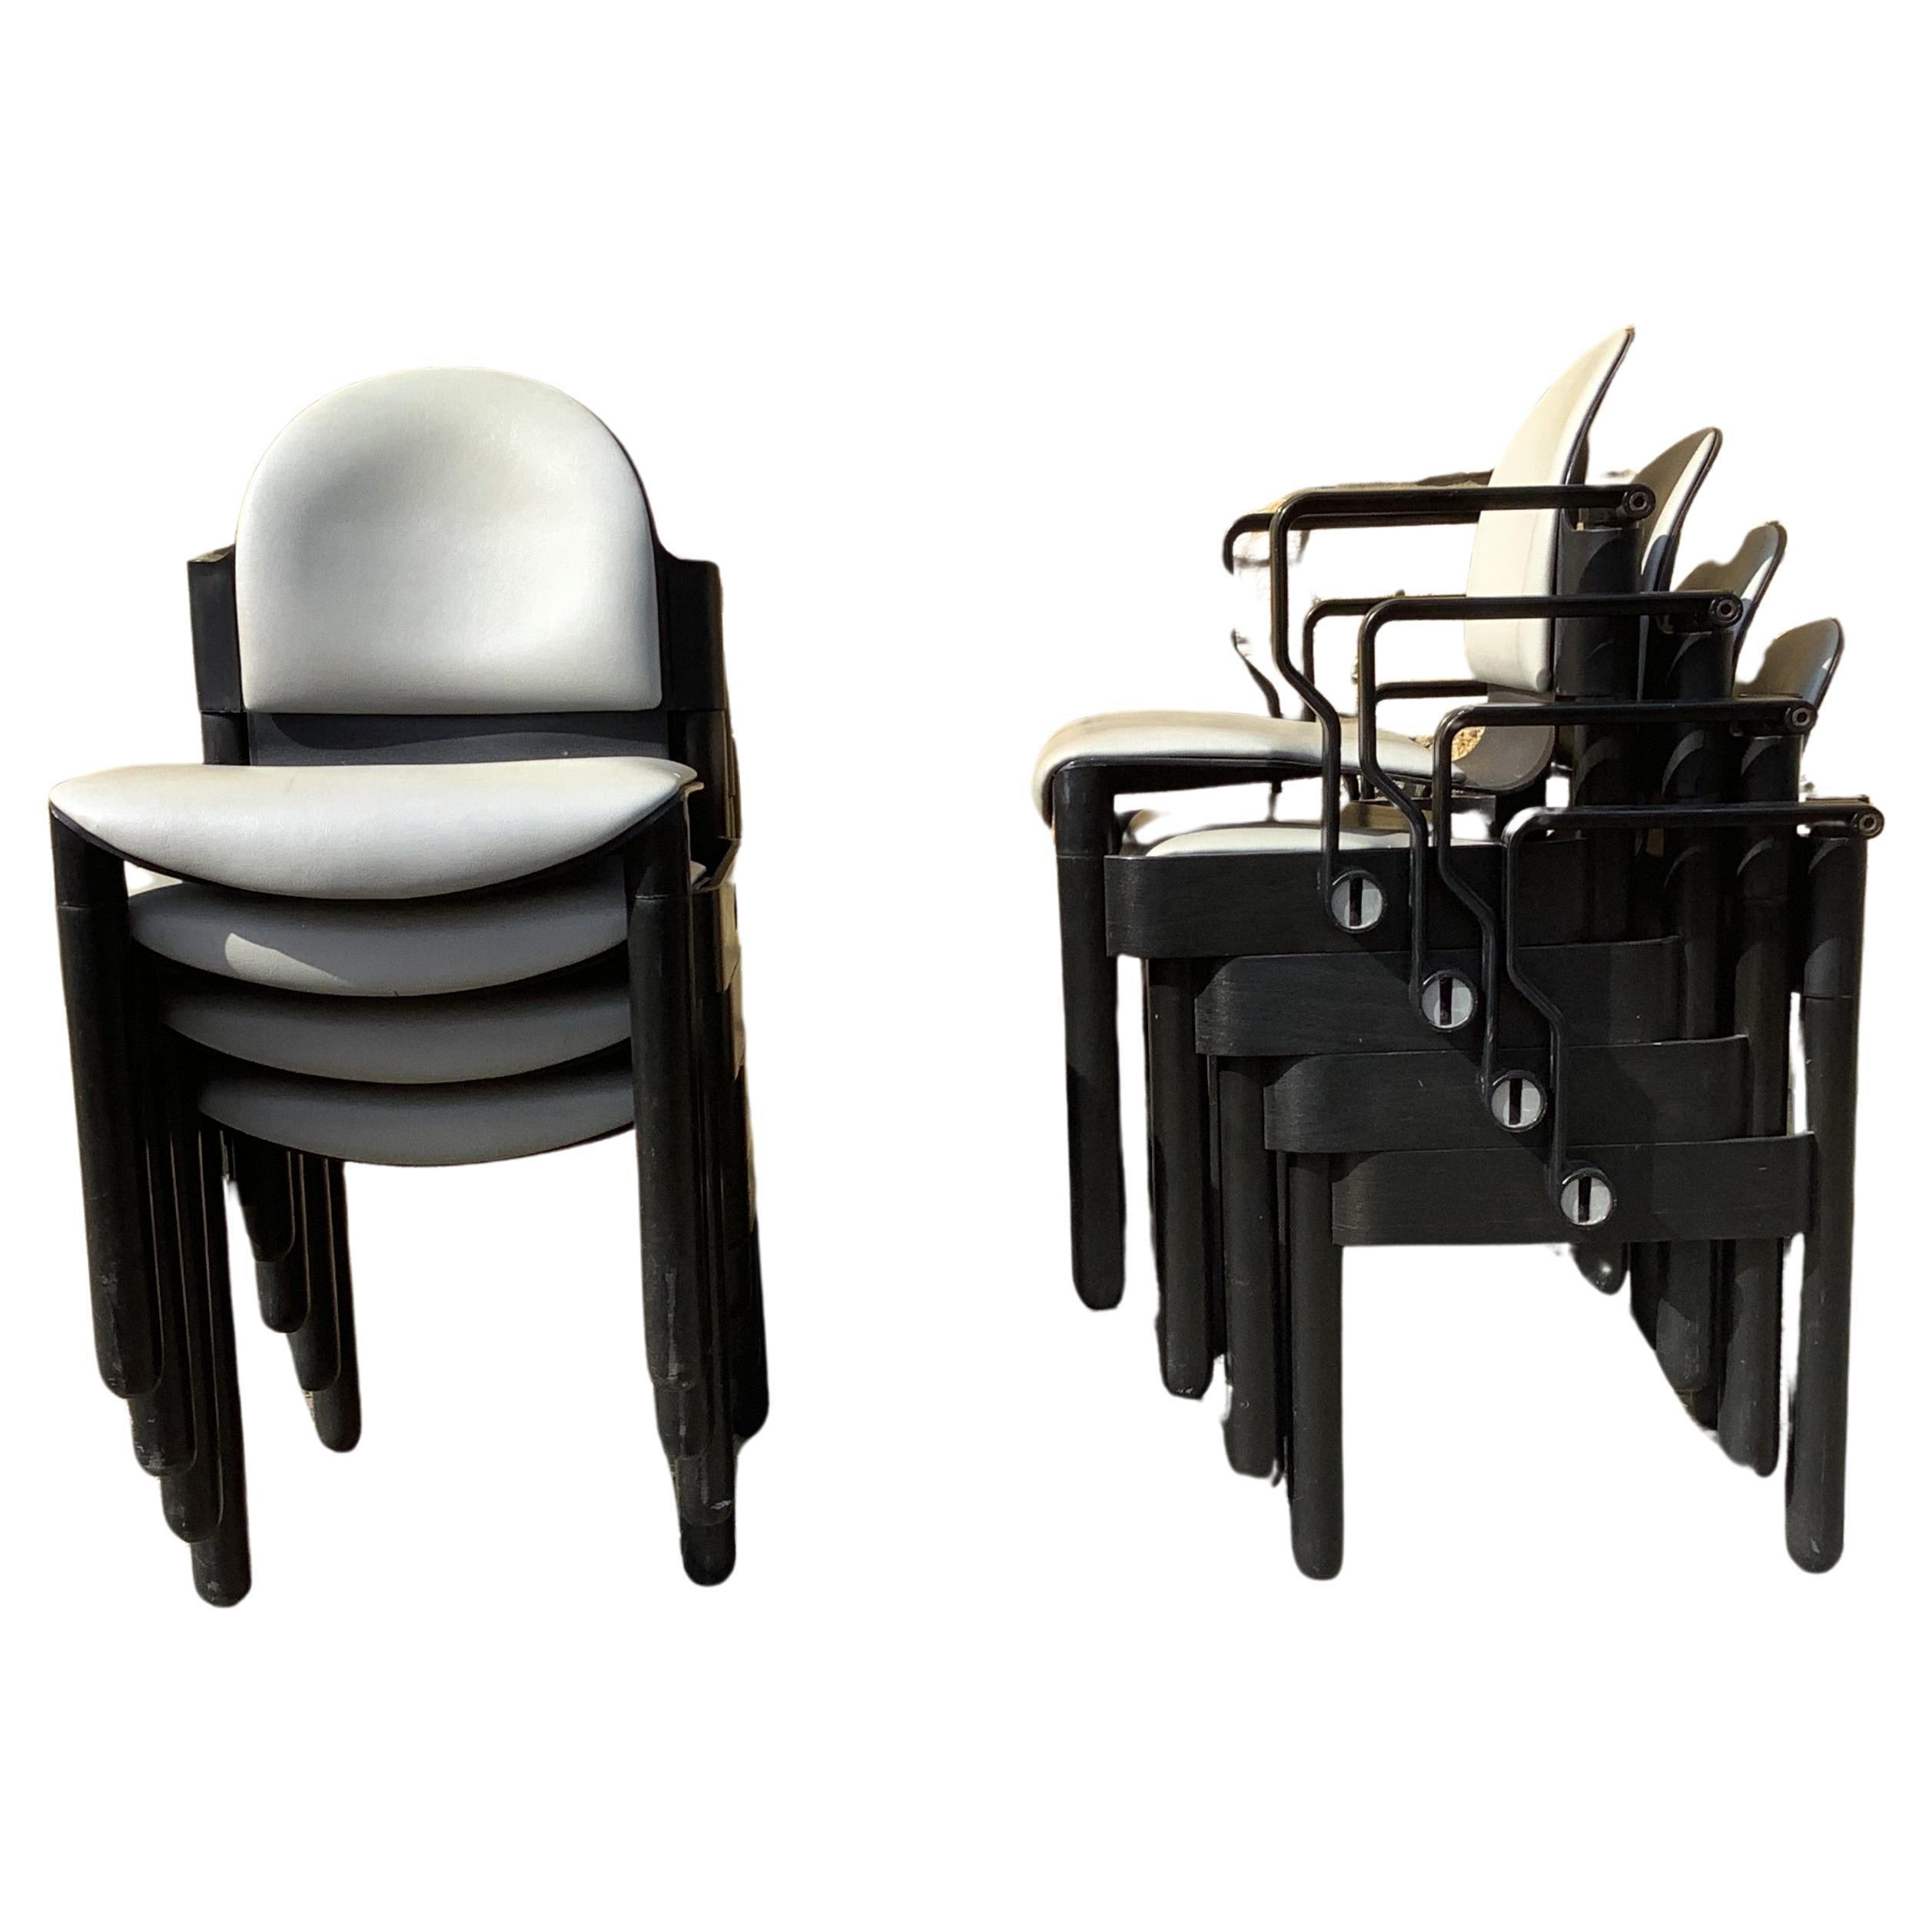 Gerd Lange Chairs